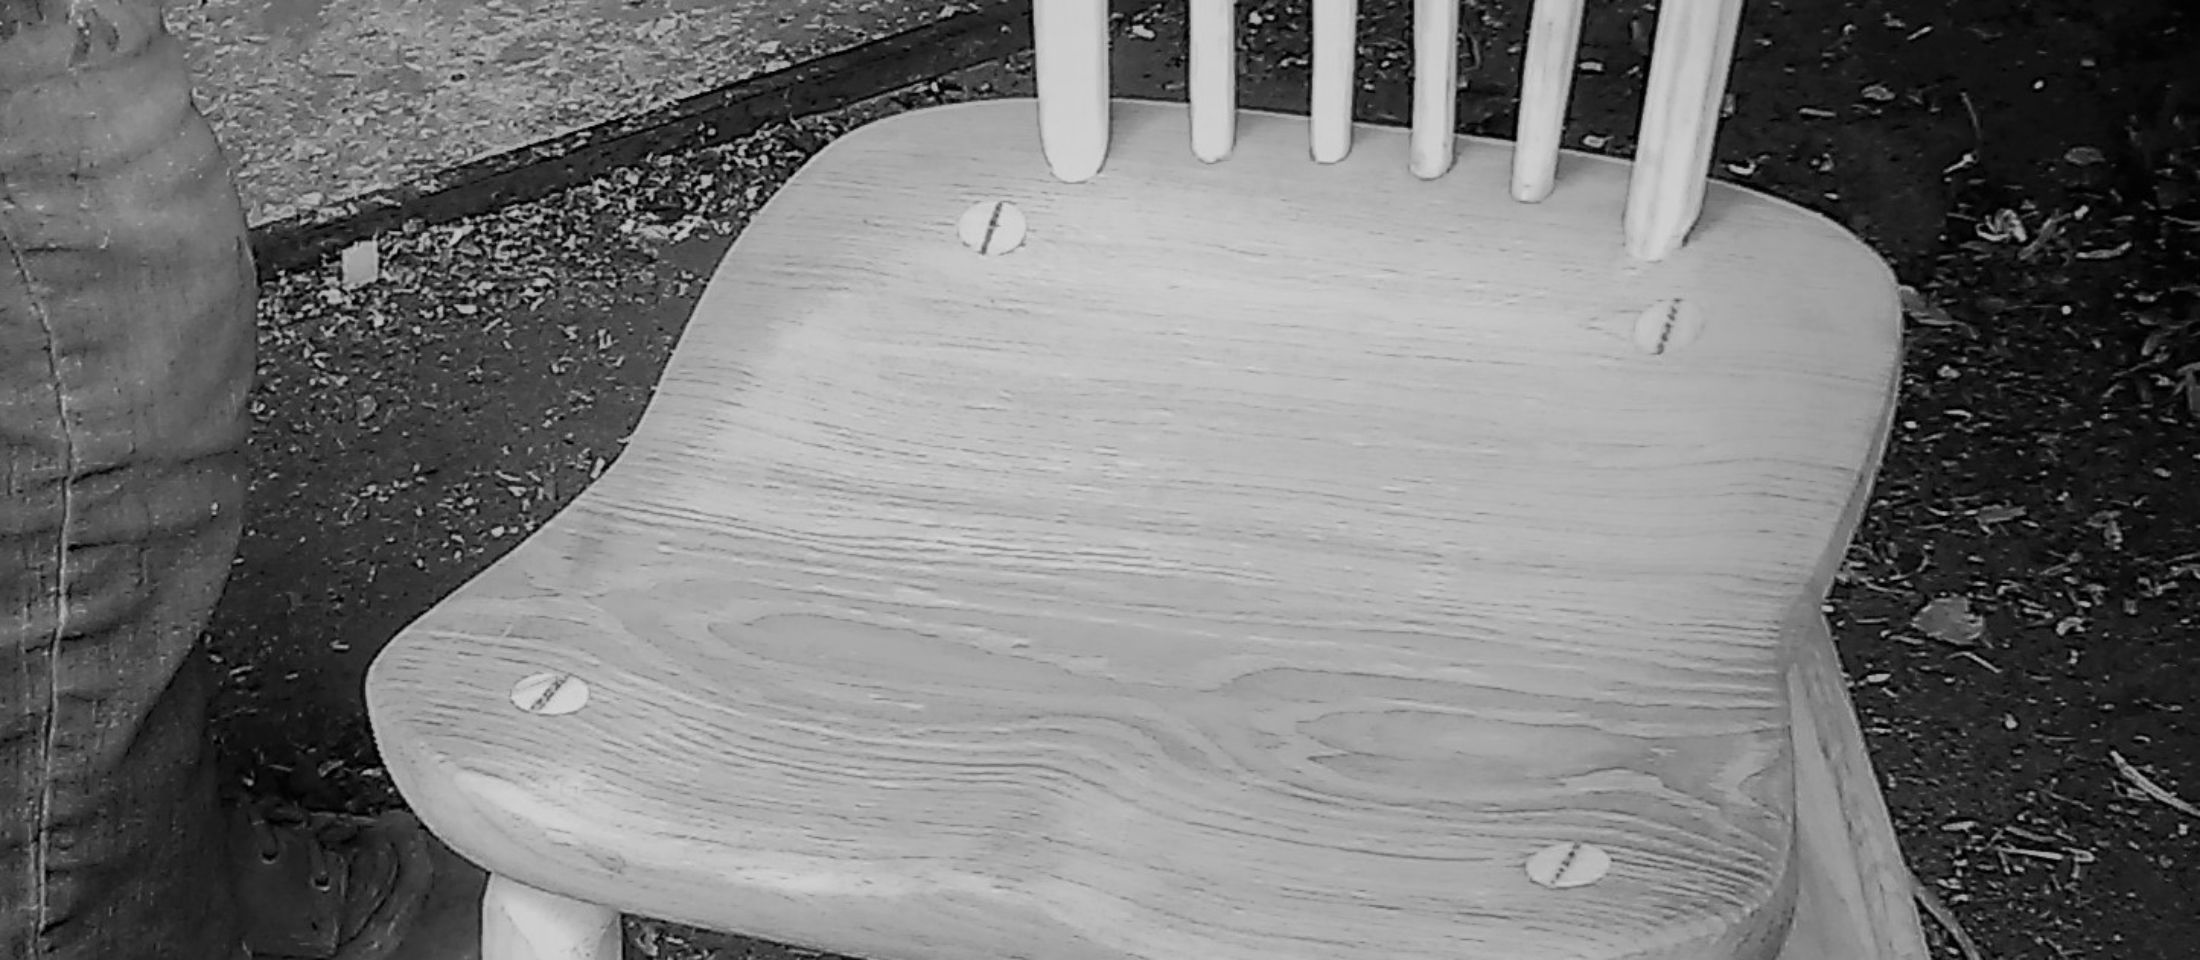 Ash wood chair, John Waller. Photo: John Waller